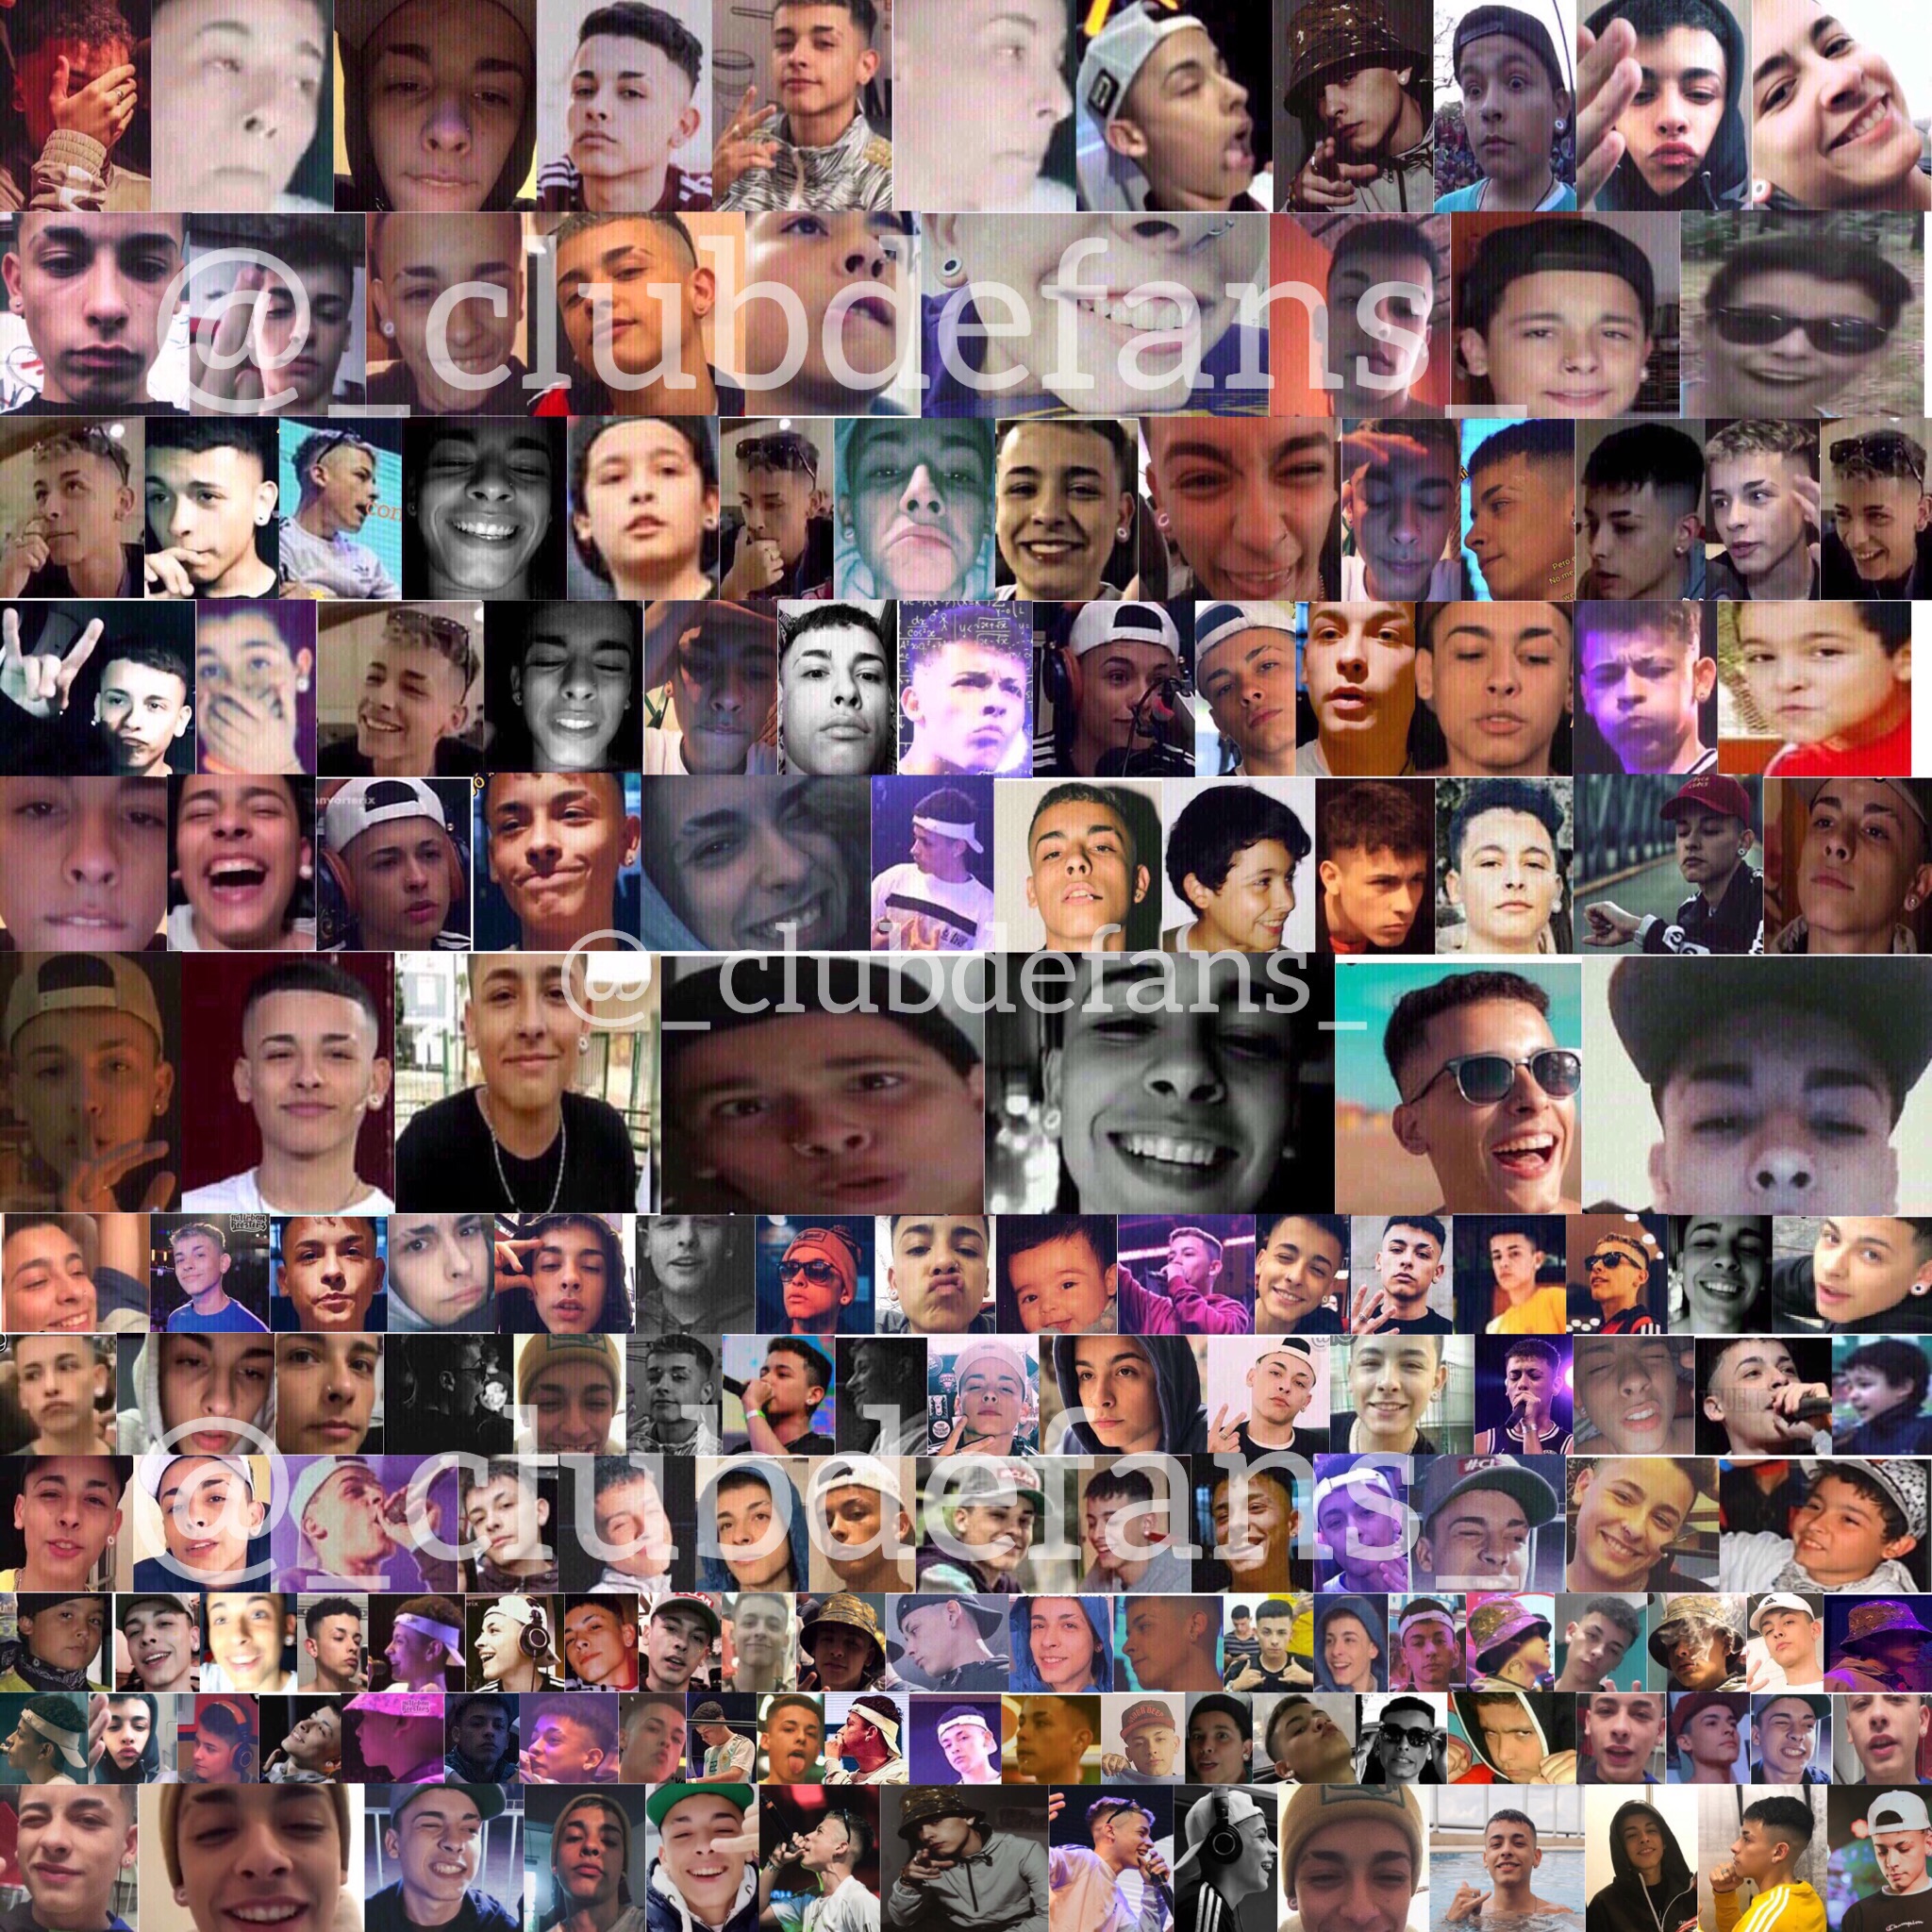 youtubers collage tumblr